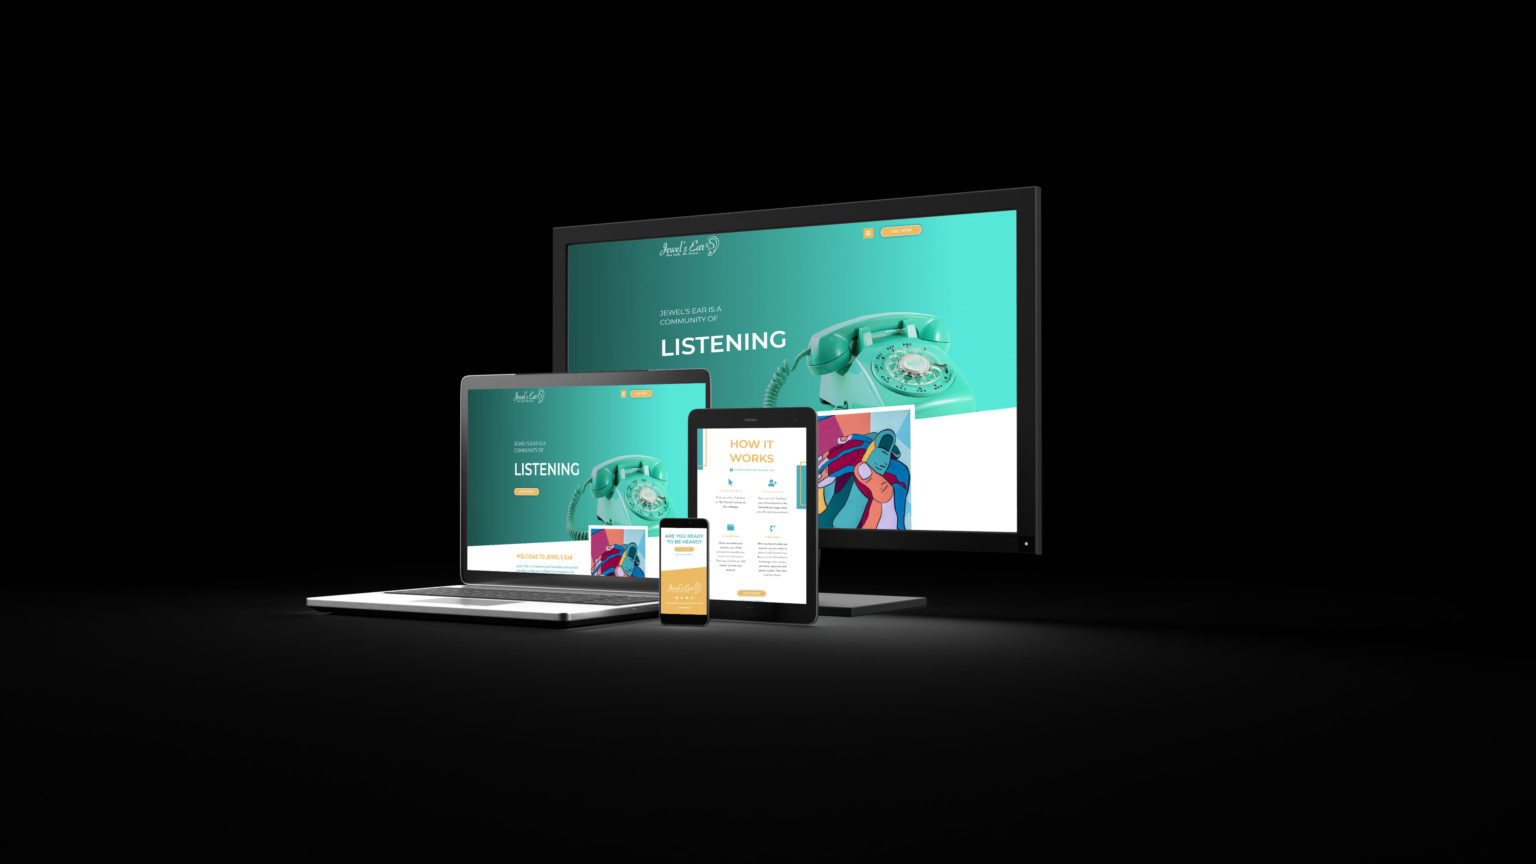 jewels-ear-listening-service-website-device-mockup-responsive-design